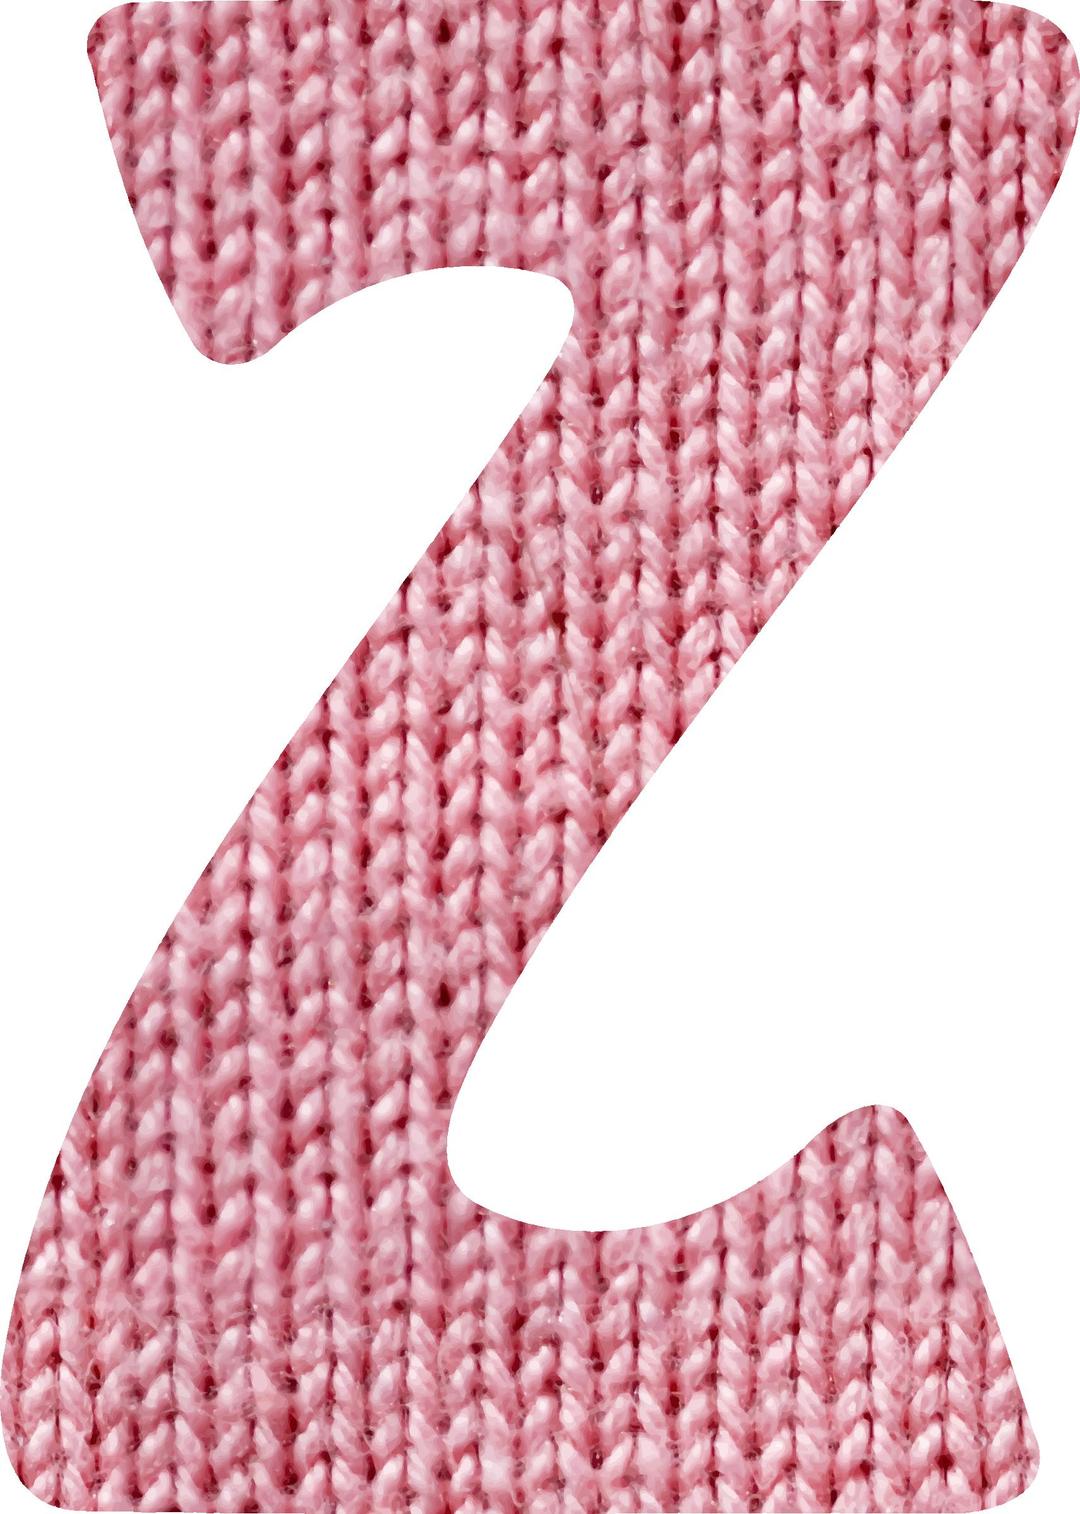 Woolly alphabet, Z png transparent